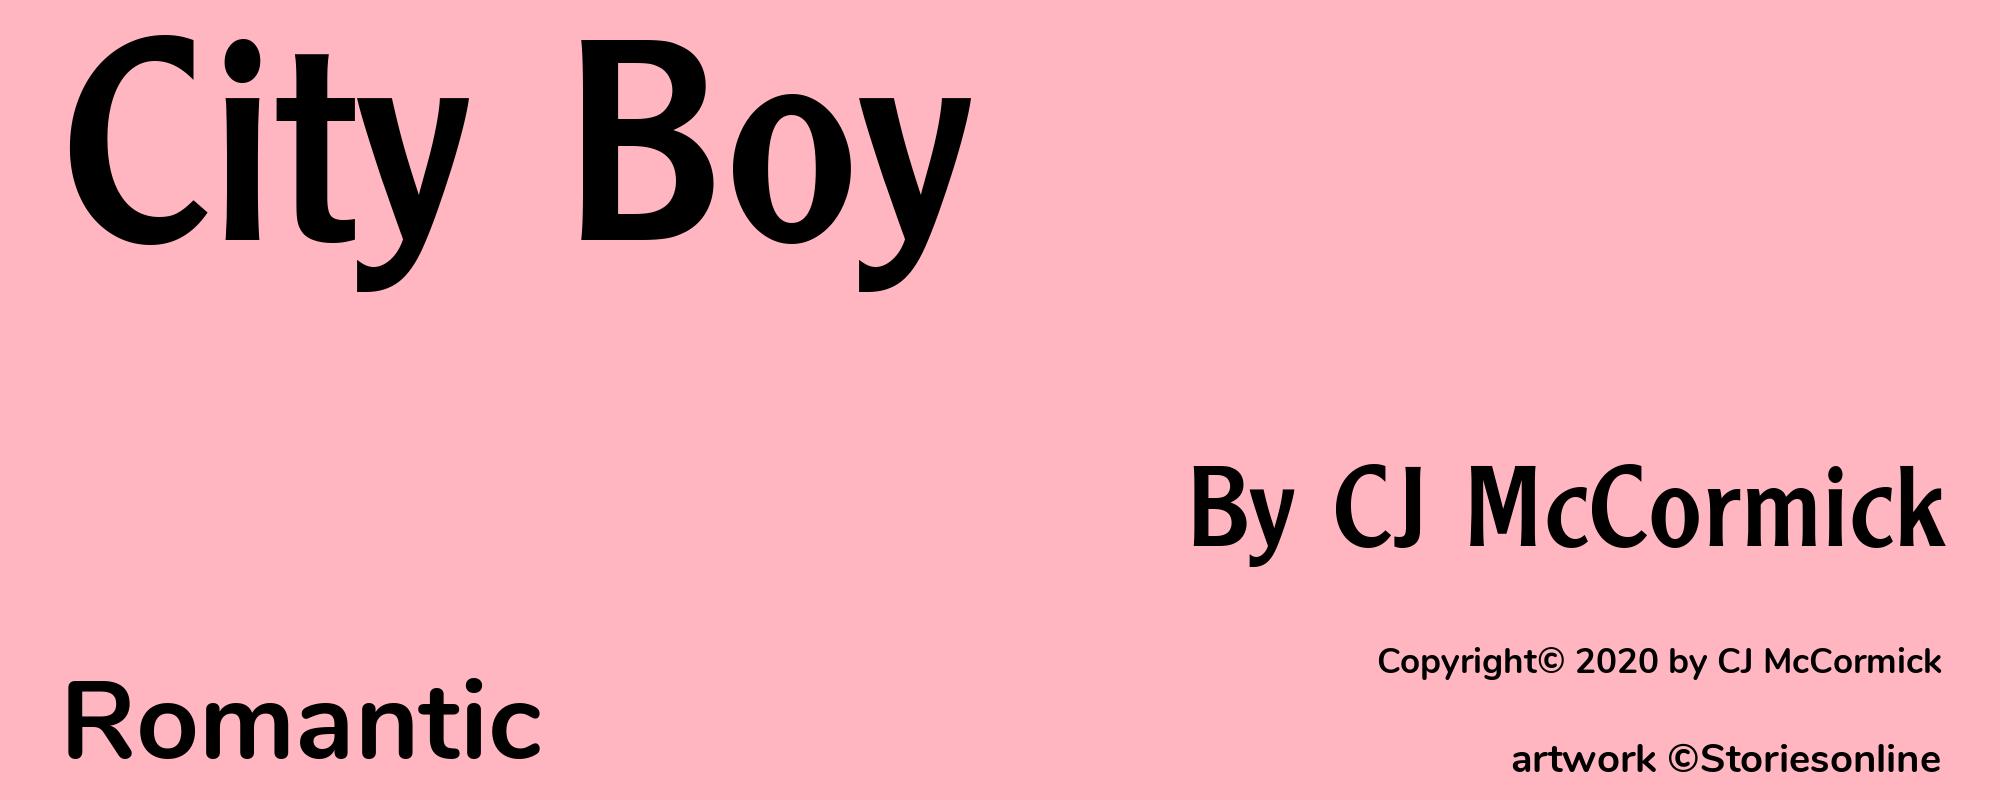 City Boy - Cover